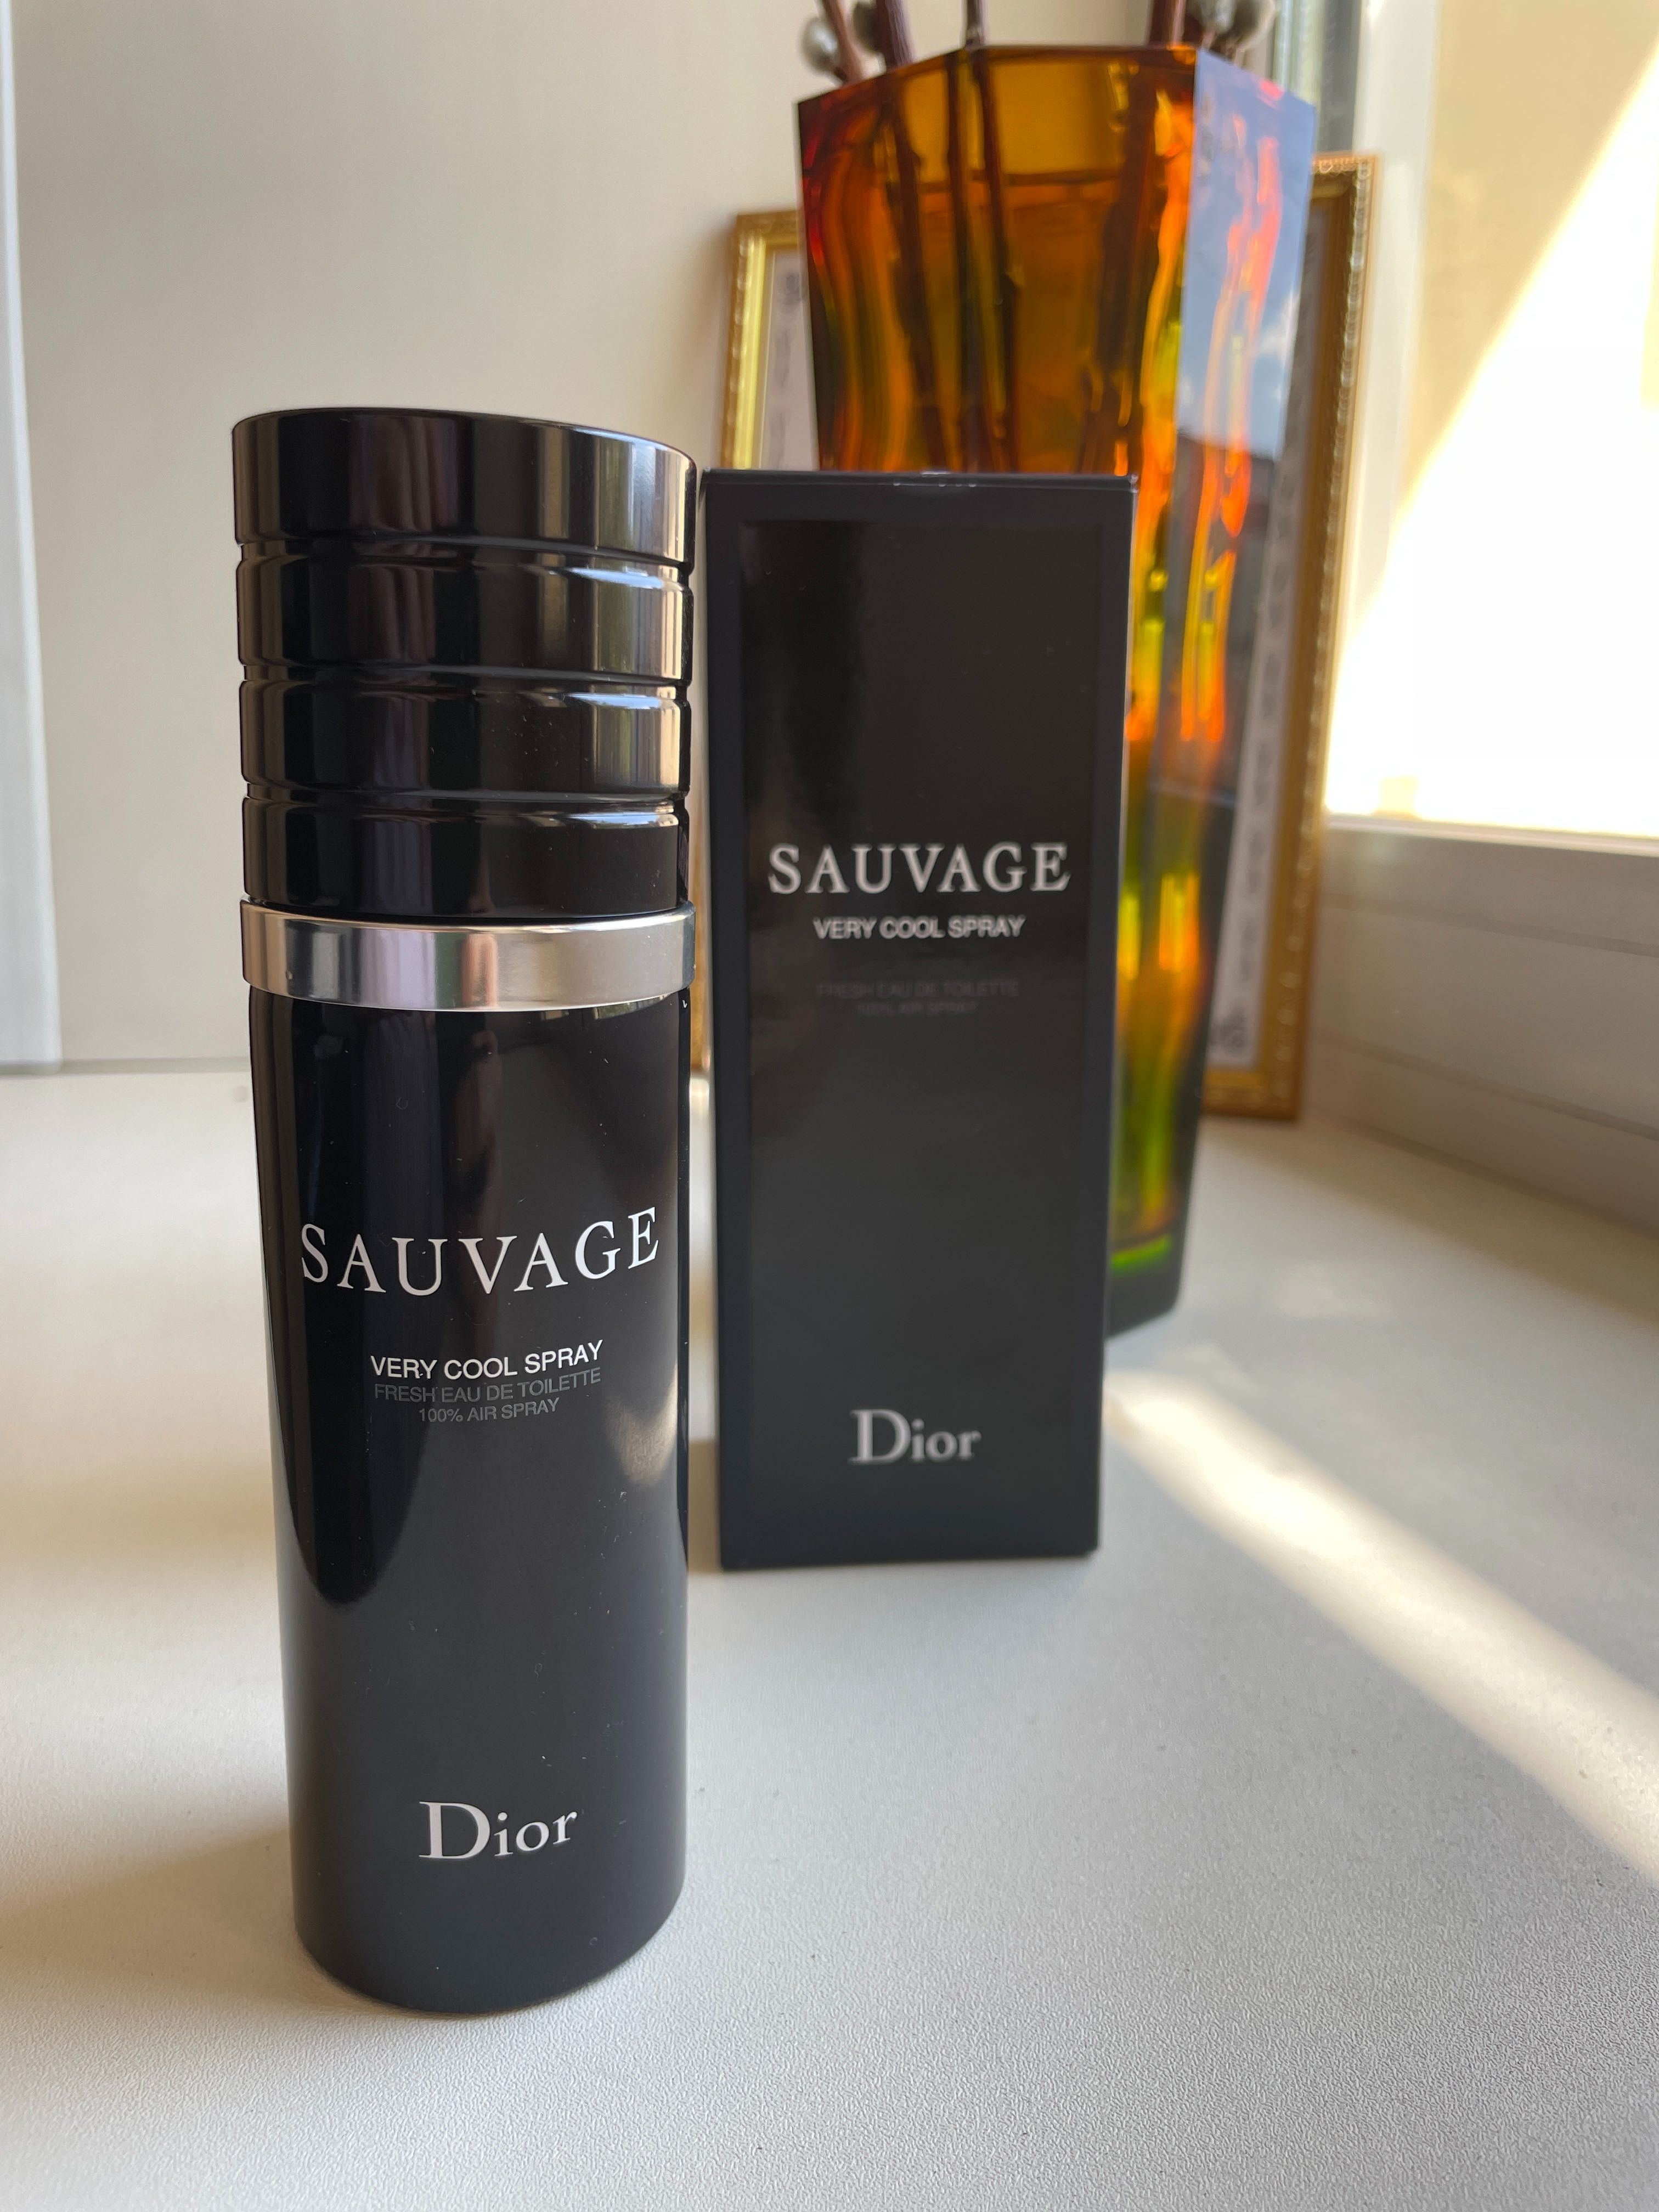 Dior Sauvage very cool spray